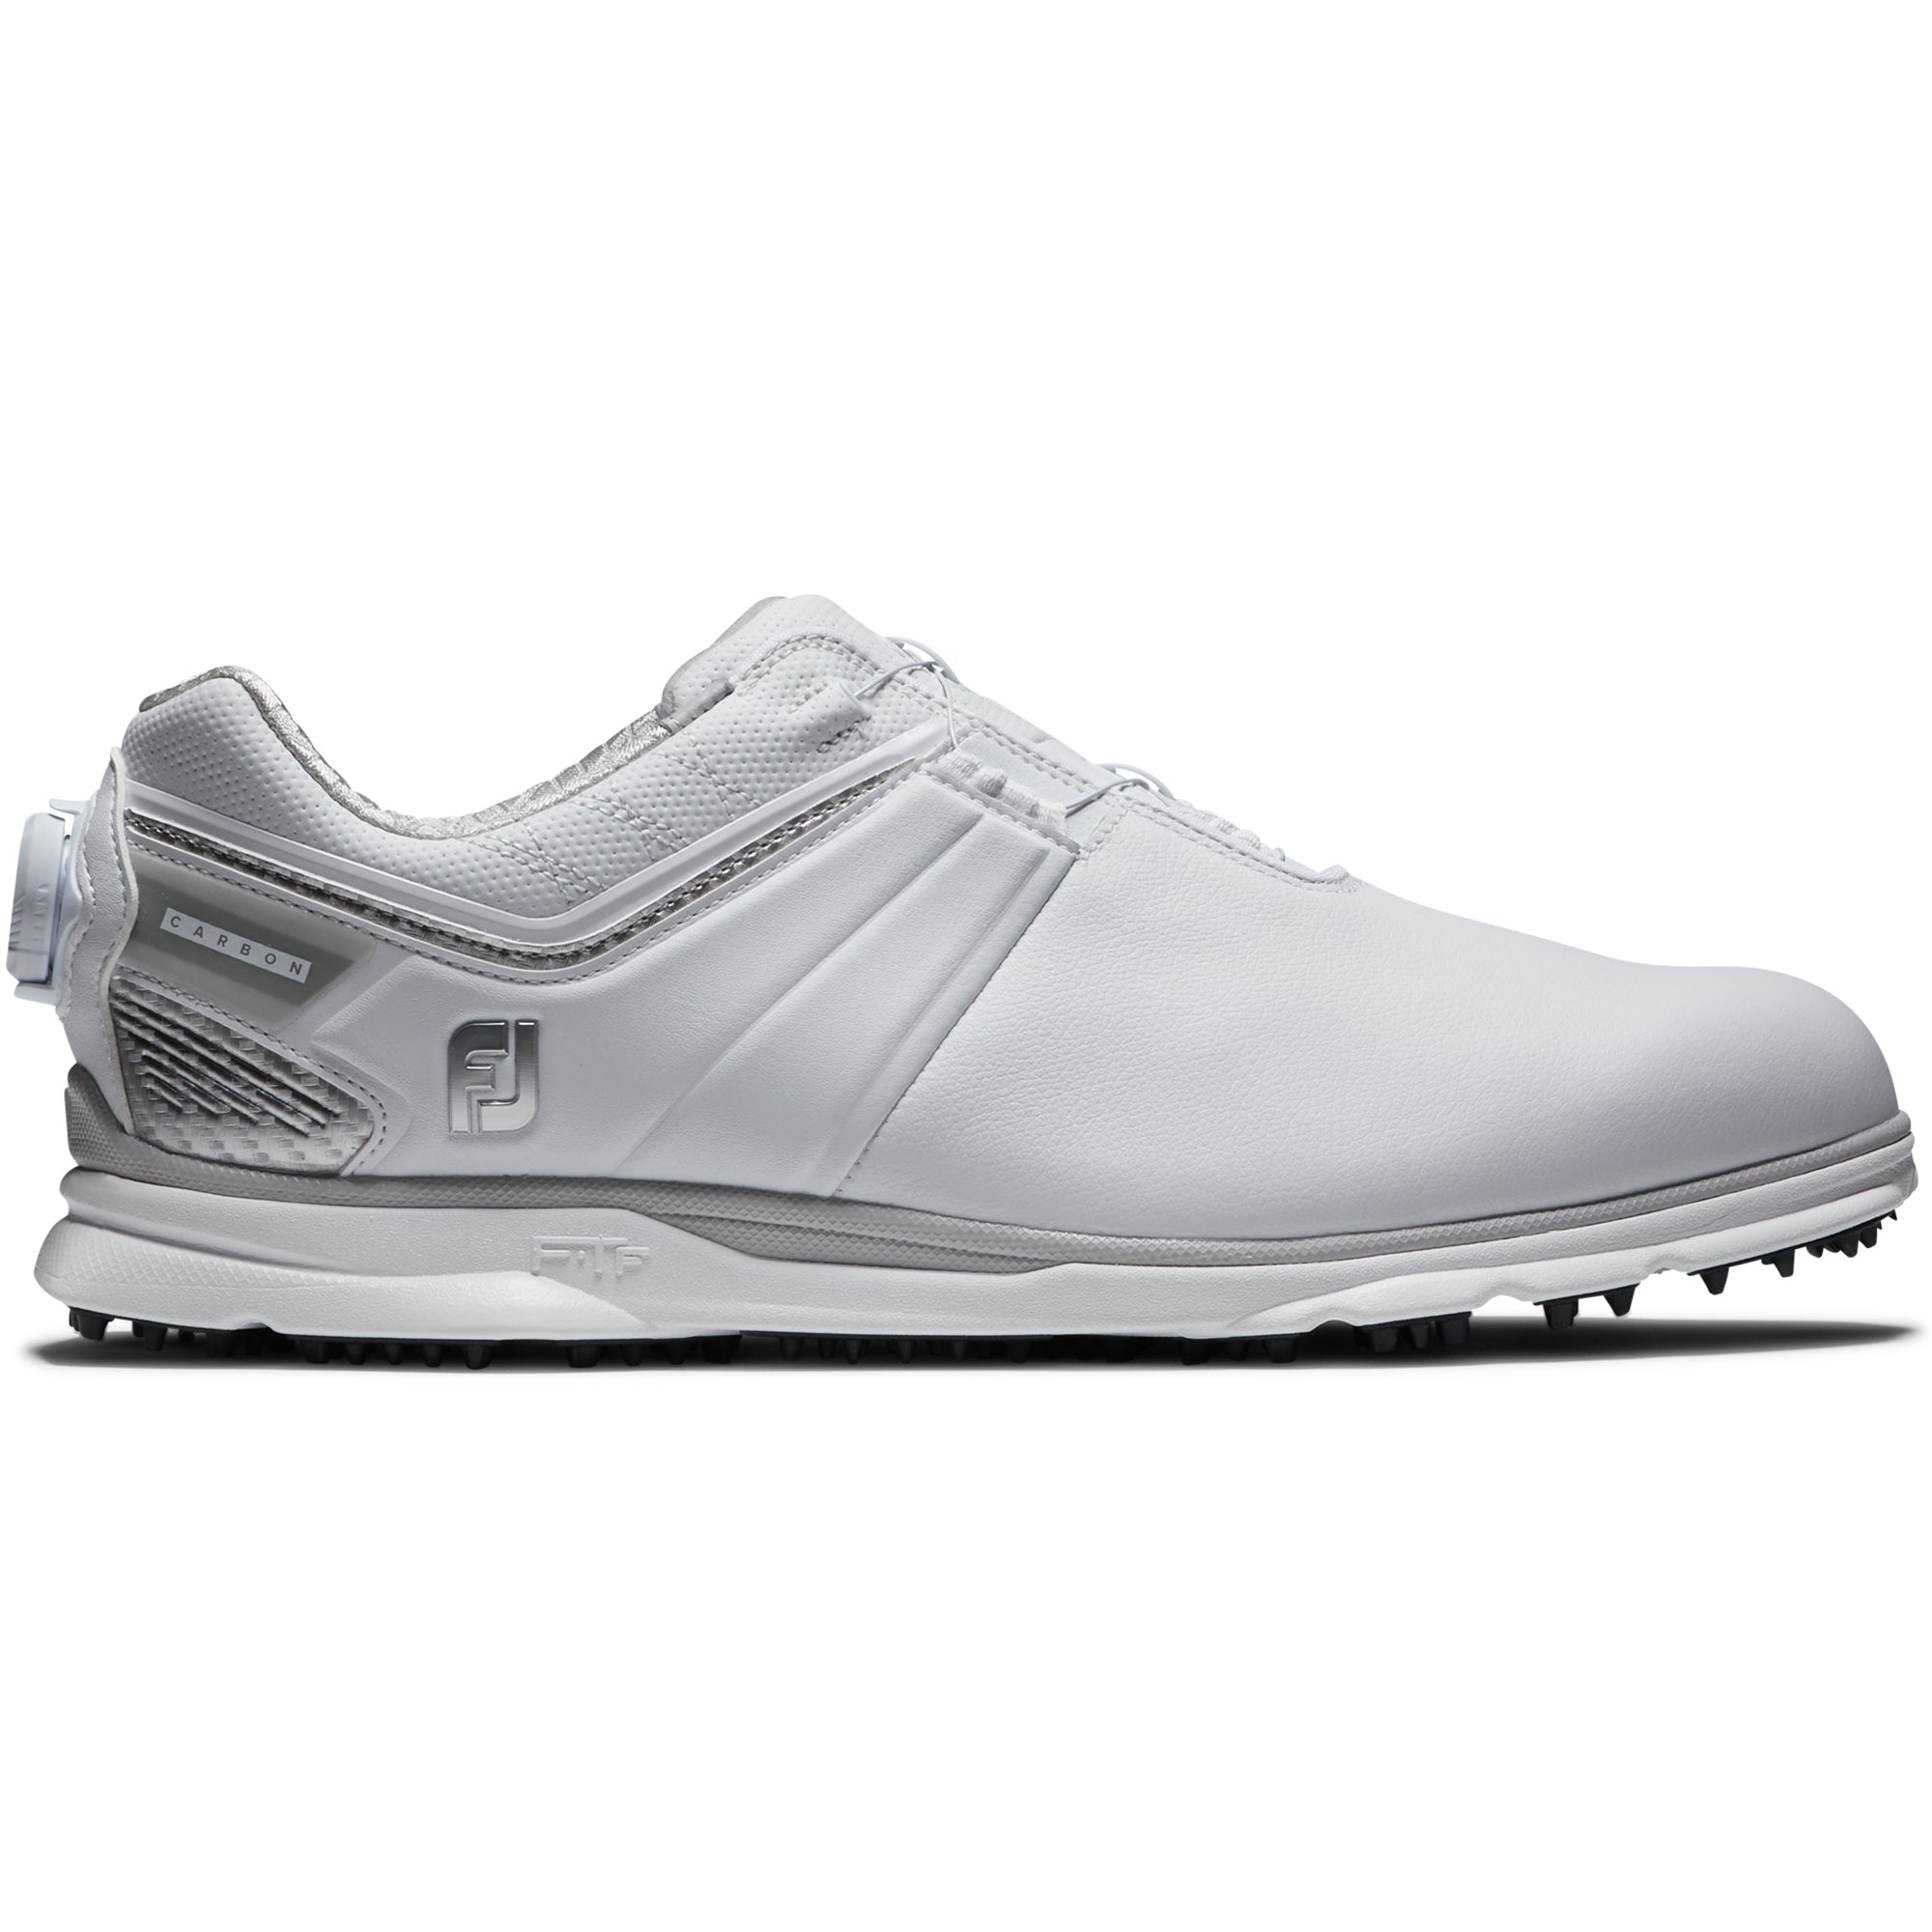 footjoy-pro-sl-carbon-boa-golf-shoes-53085-white-silver